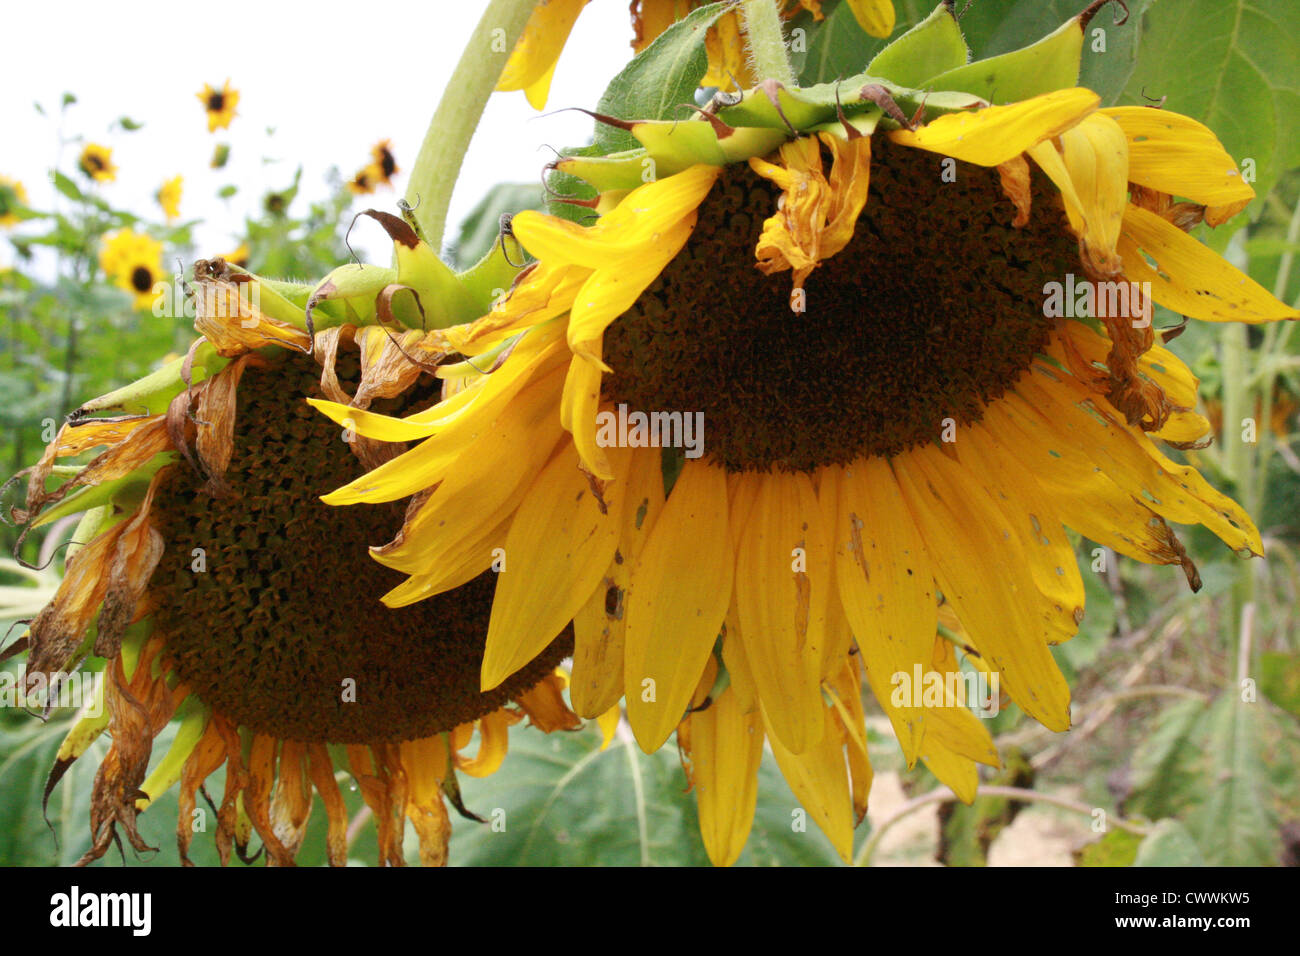 sunflower fine art photograph picture Stock Photo